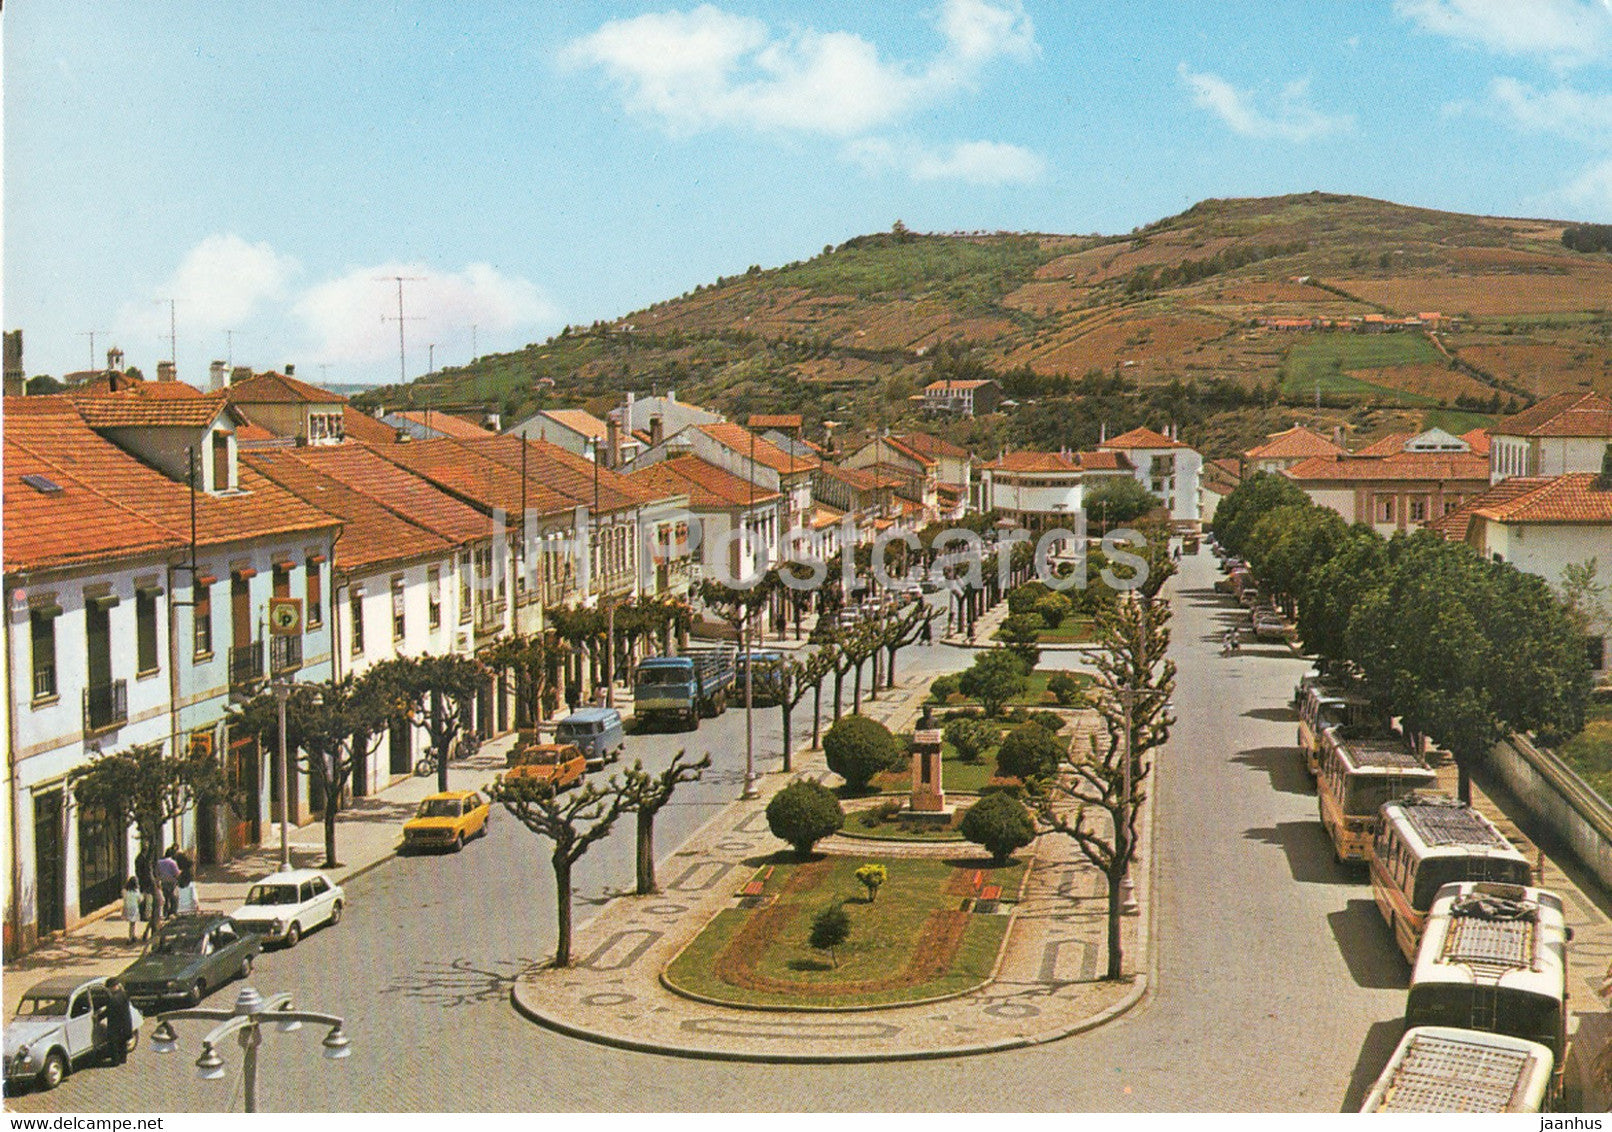 Braganca - Avenue Joao da Cruz - car - Portugal - unused - JH Postcards